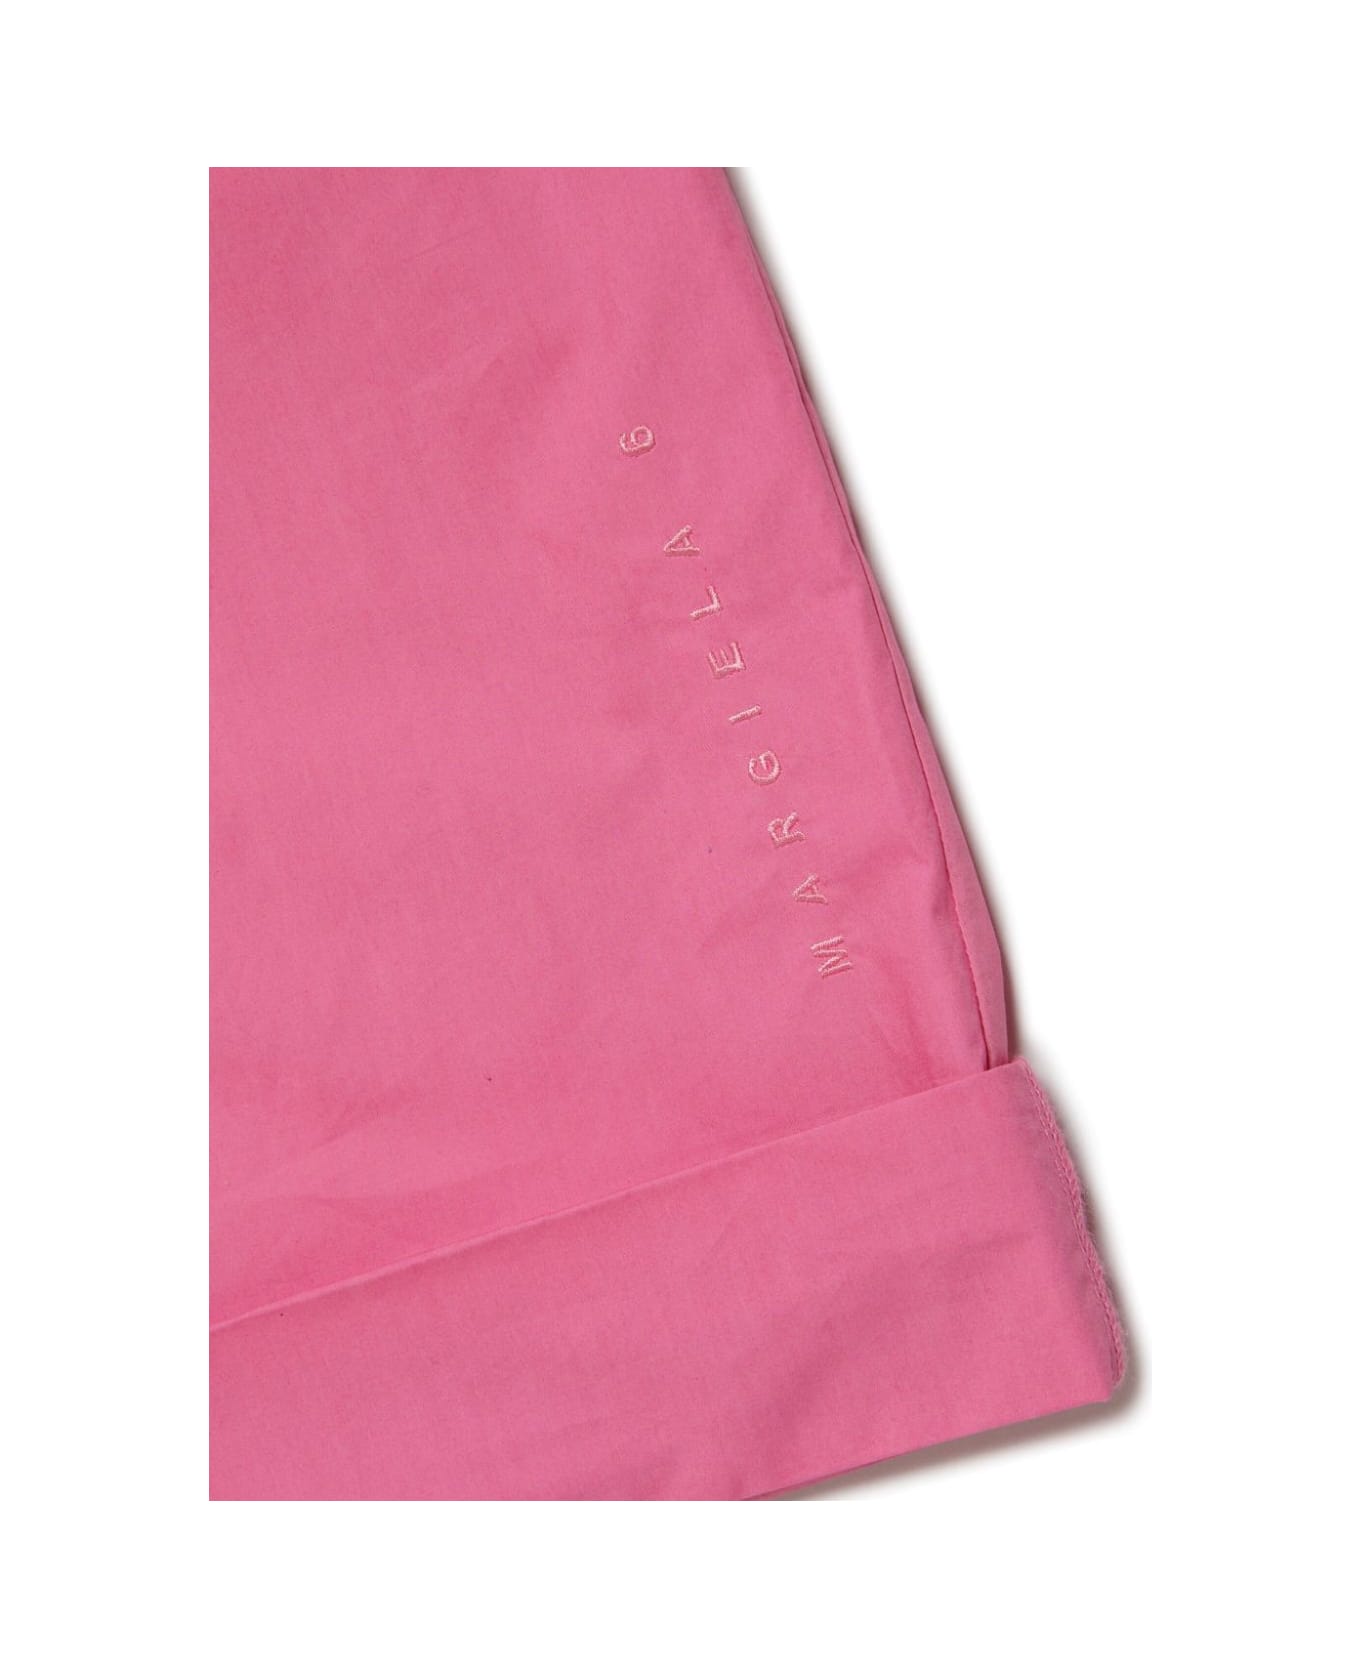 MM6 Maison Margiela Pants - Pink